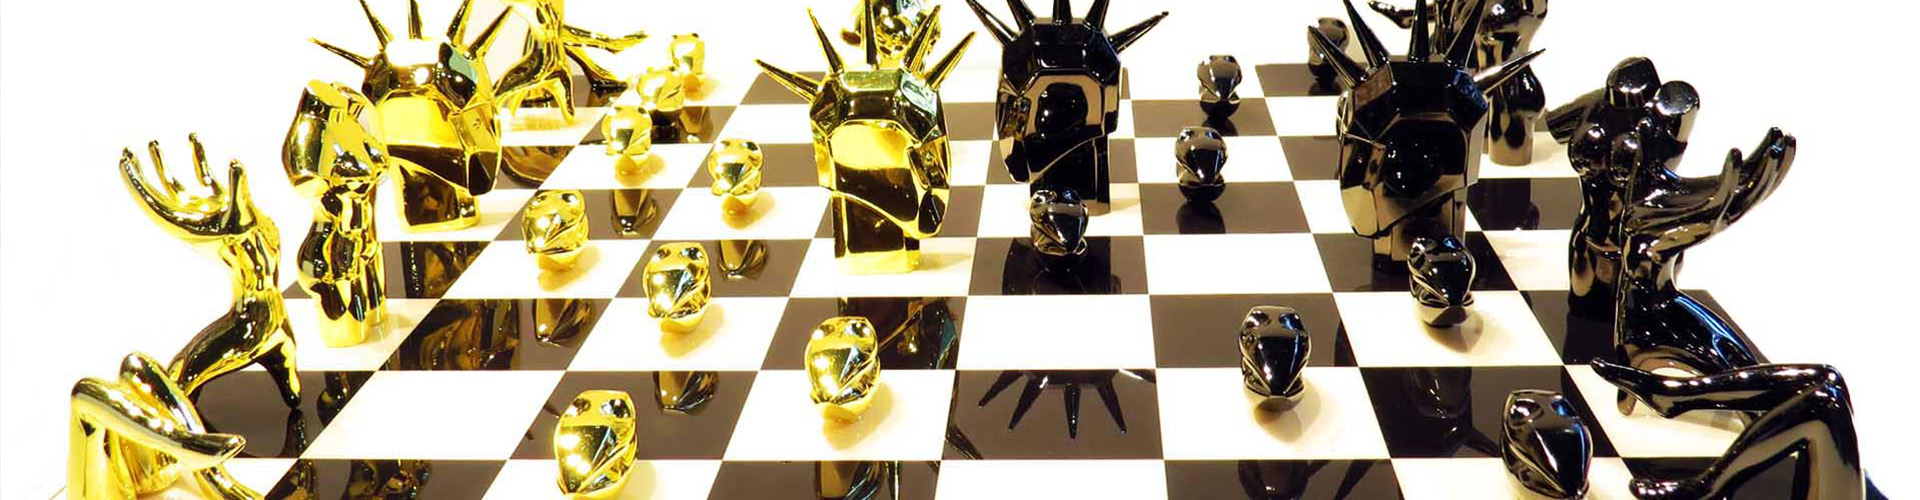 Metalware Home Decor Chess Board